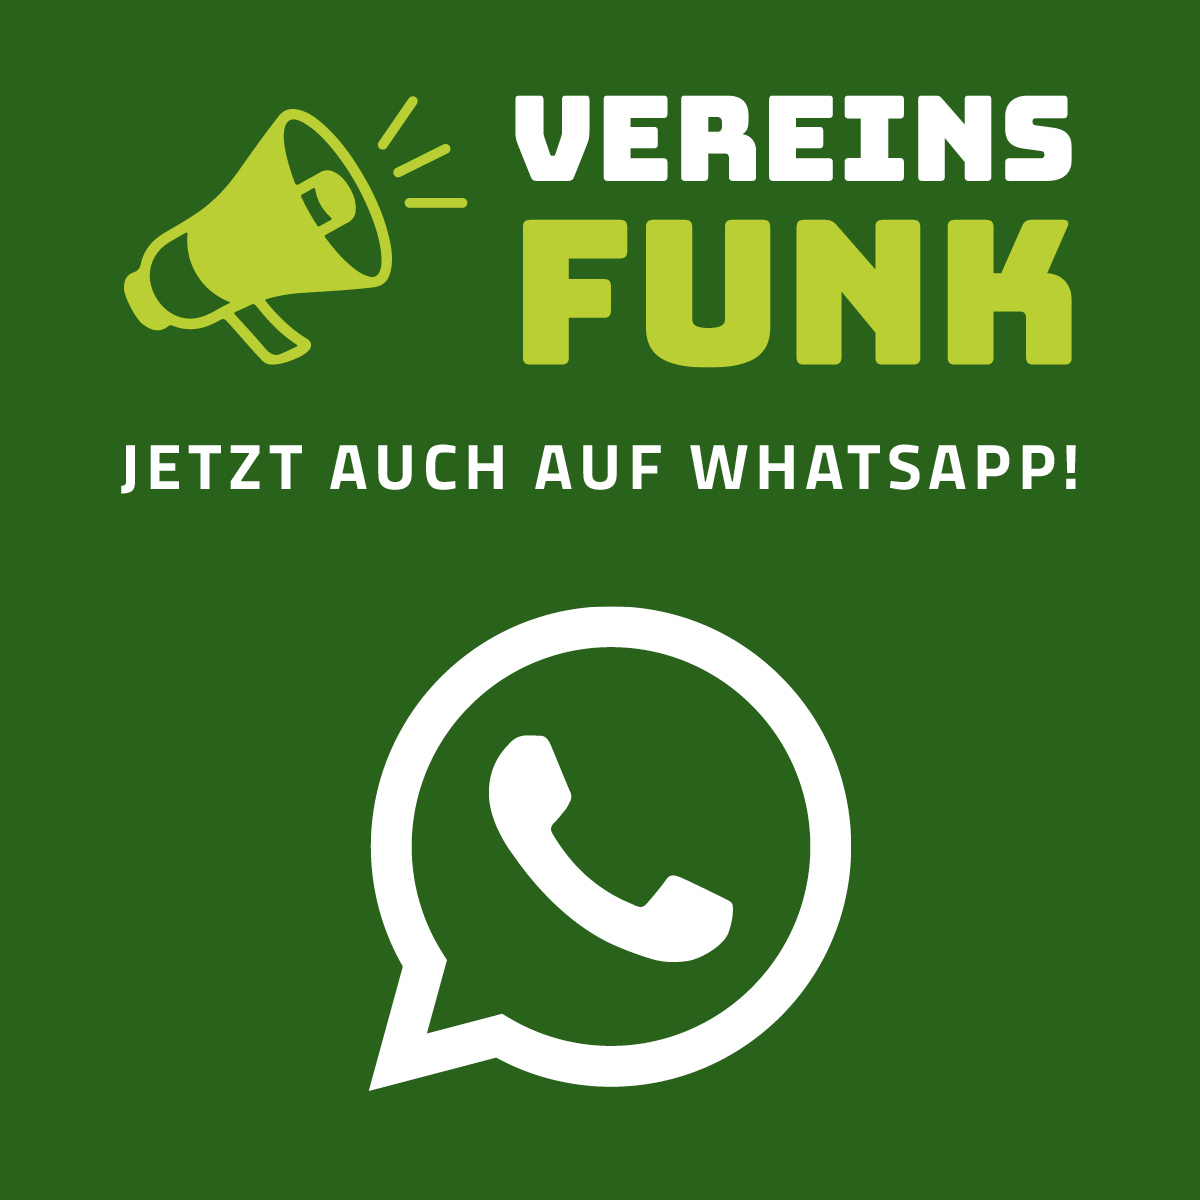 Vereins-Funk_WhatsApp2